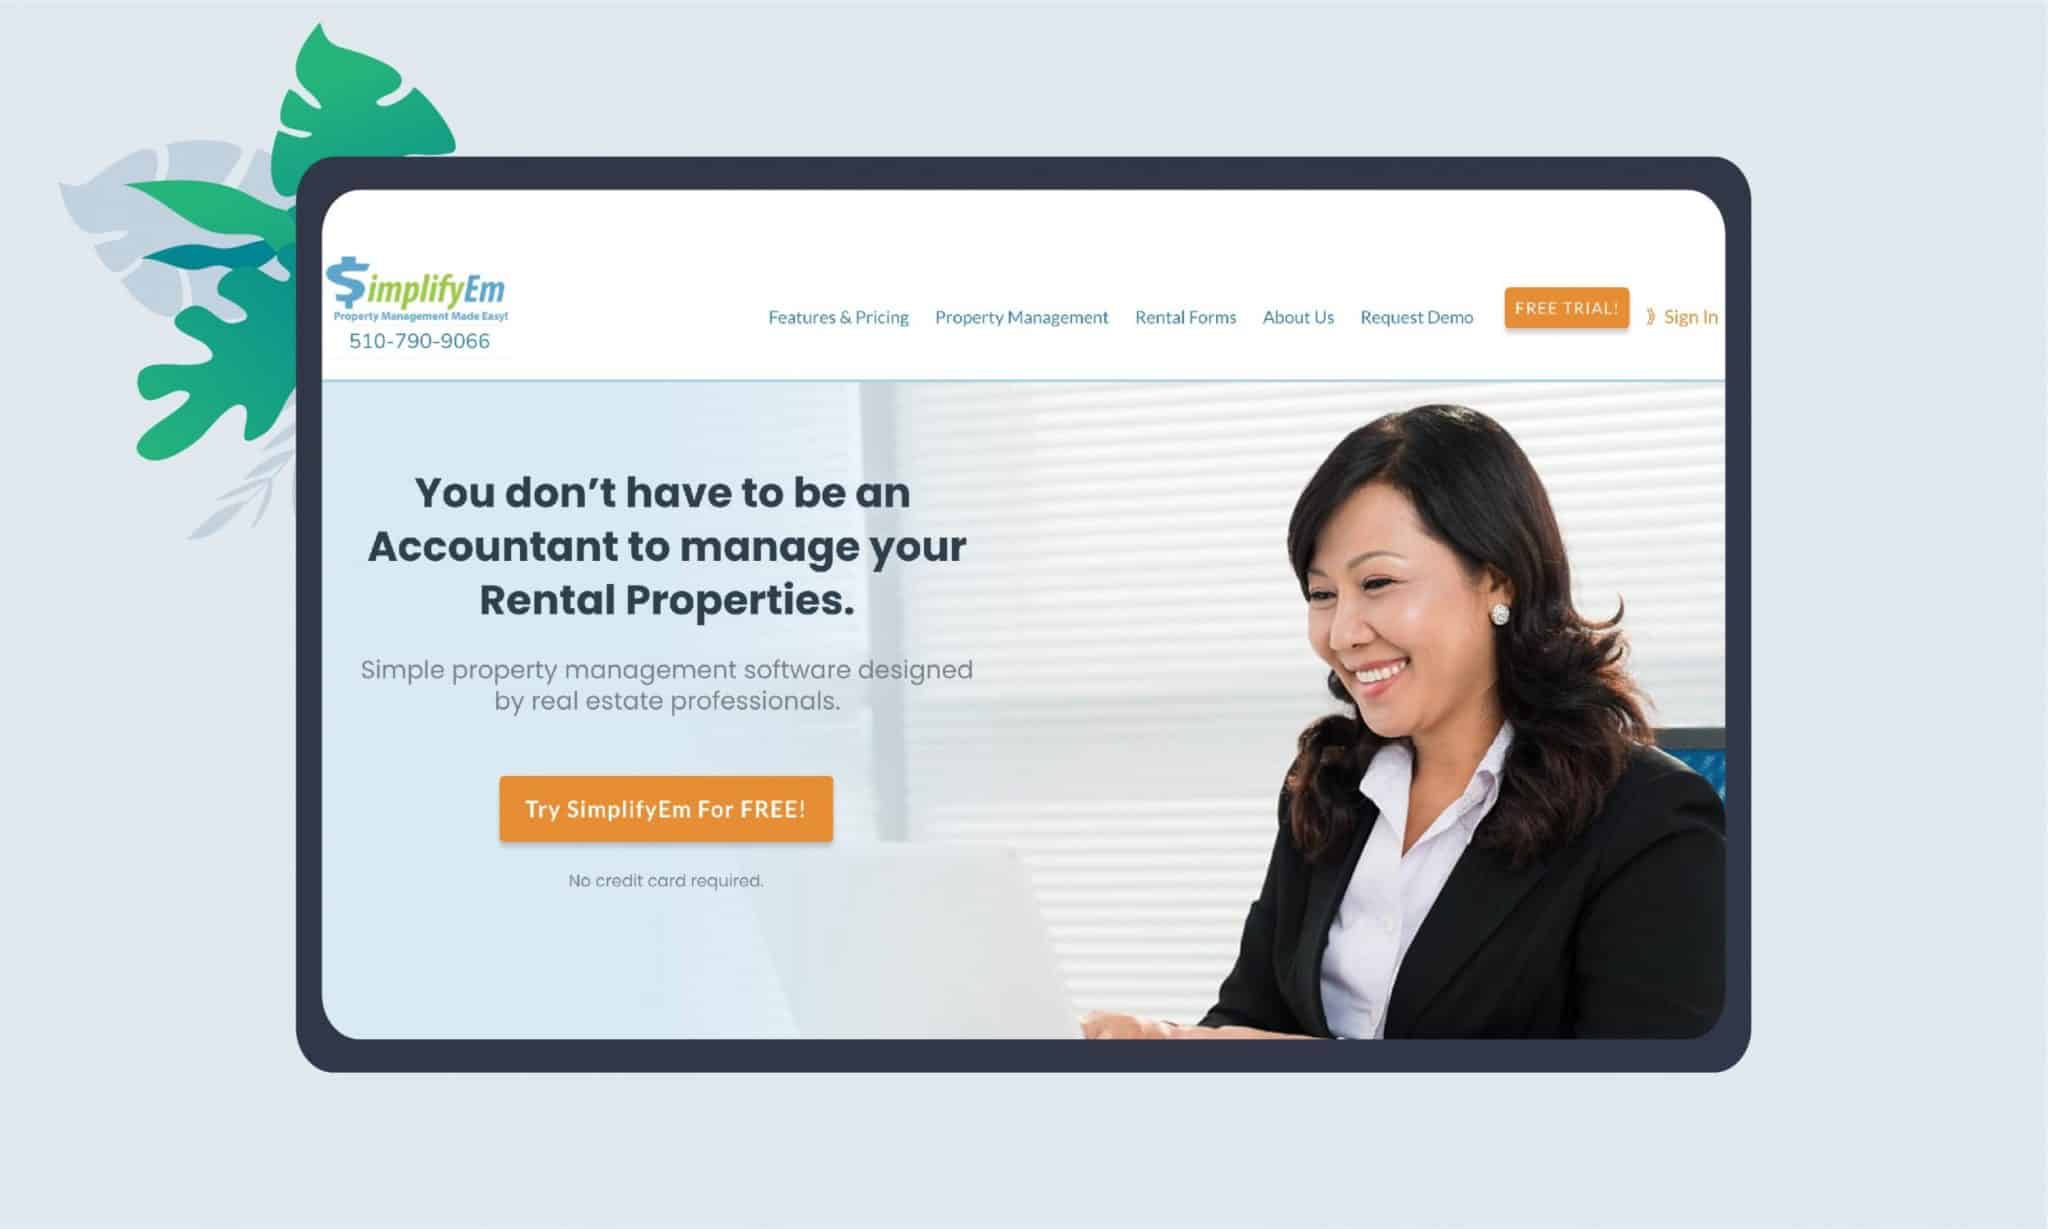 SimplifyEm as a popular property management platform